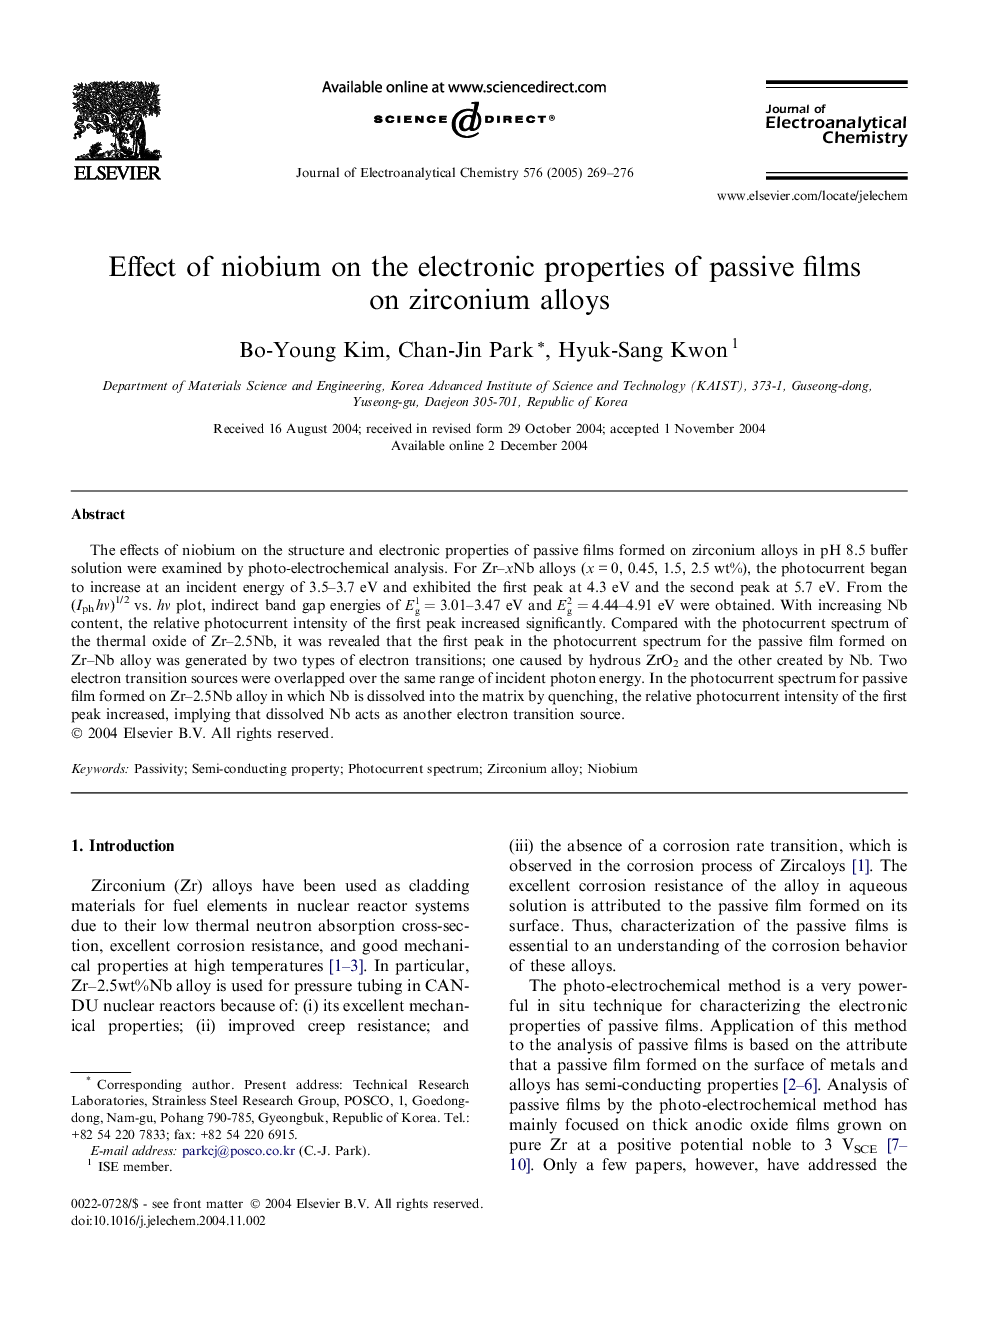 Effect of niobium on the electronic properties of passive films on zirconium alloys